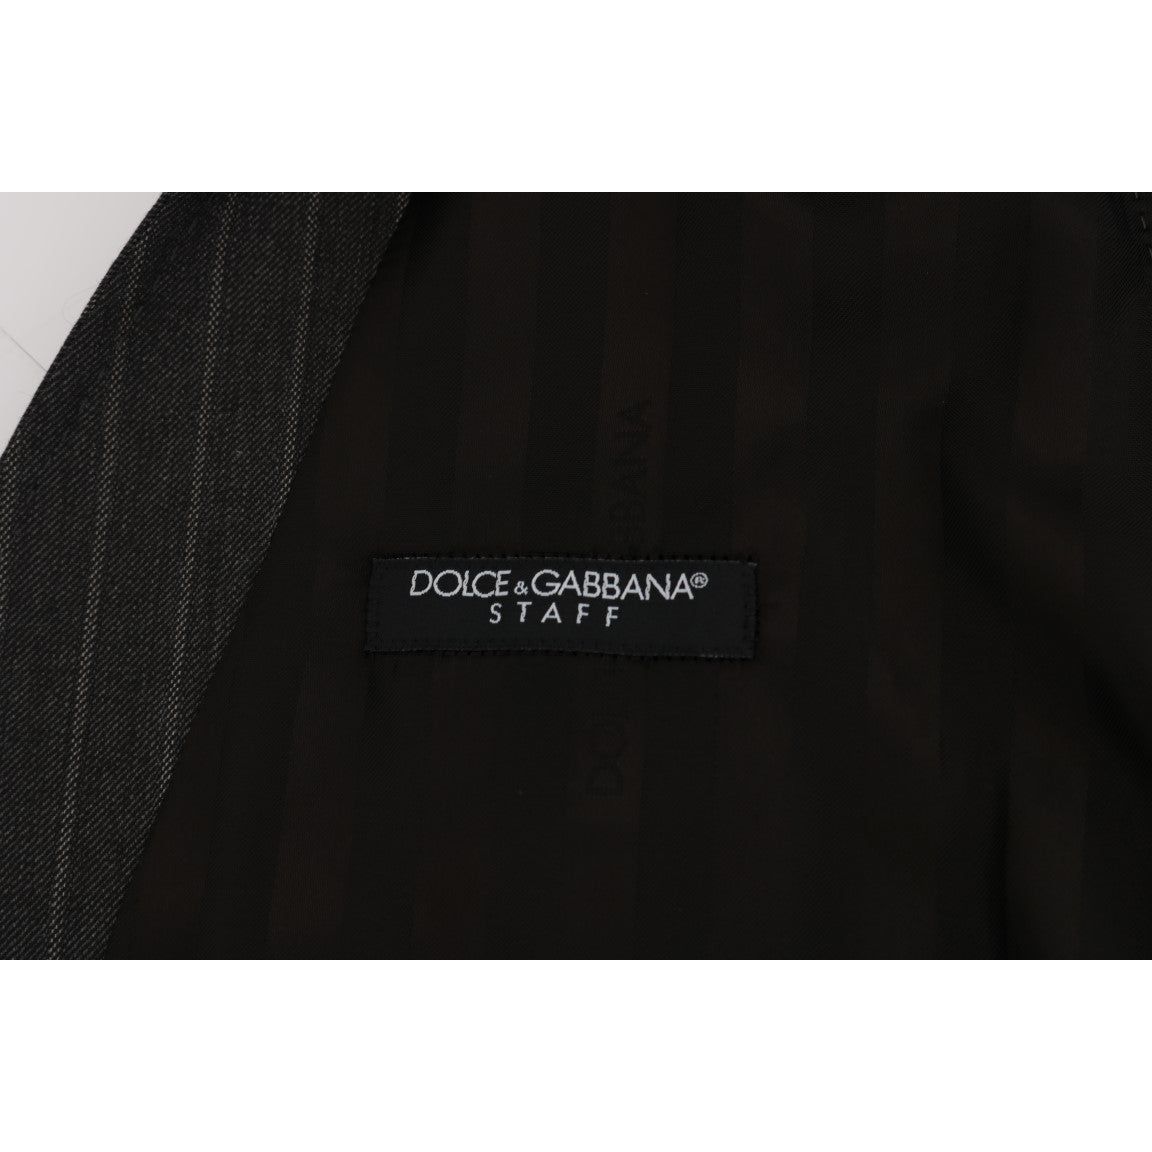 Dolce & Gabbana Elegant Striped Gray Wool Blend Waistcoat Vest gray-staff-wool-stretch-vest-1